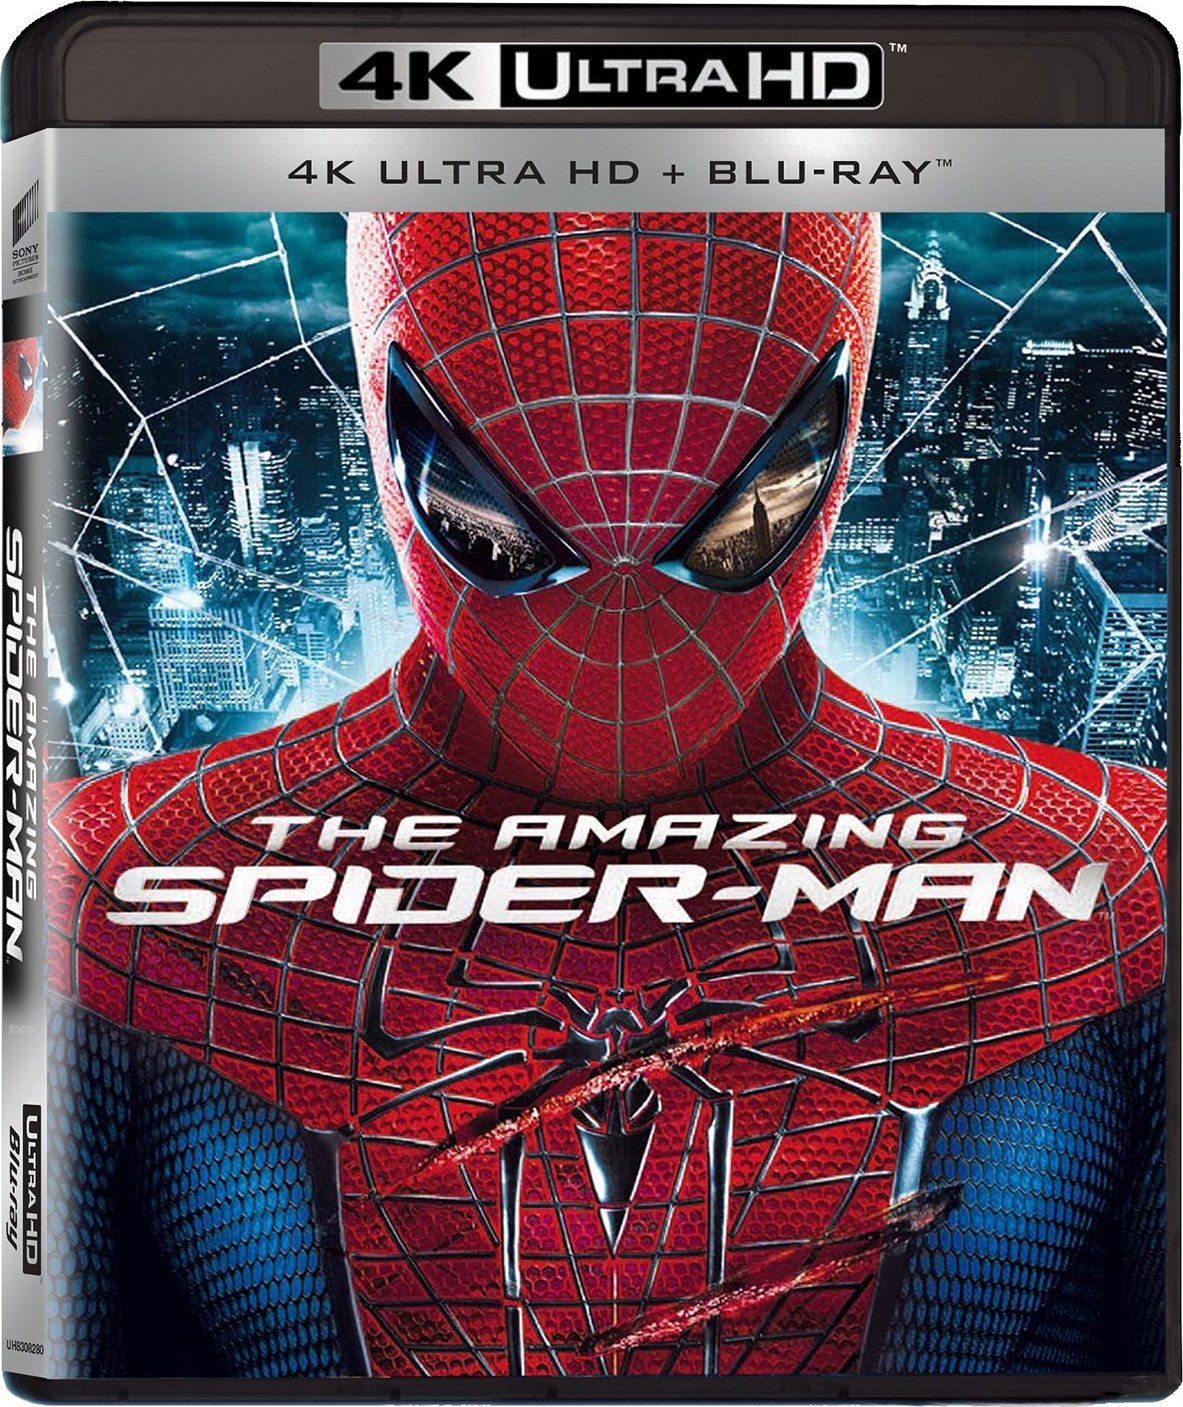 [超凡蜘蛛侠1][4K UHD 原盘简繁粤].The.Amazing.Spider-Man.2012.UHD.BluRay.2160p.HEVC.TrueHD.7.1-NIMA4K   56.06G